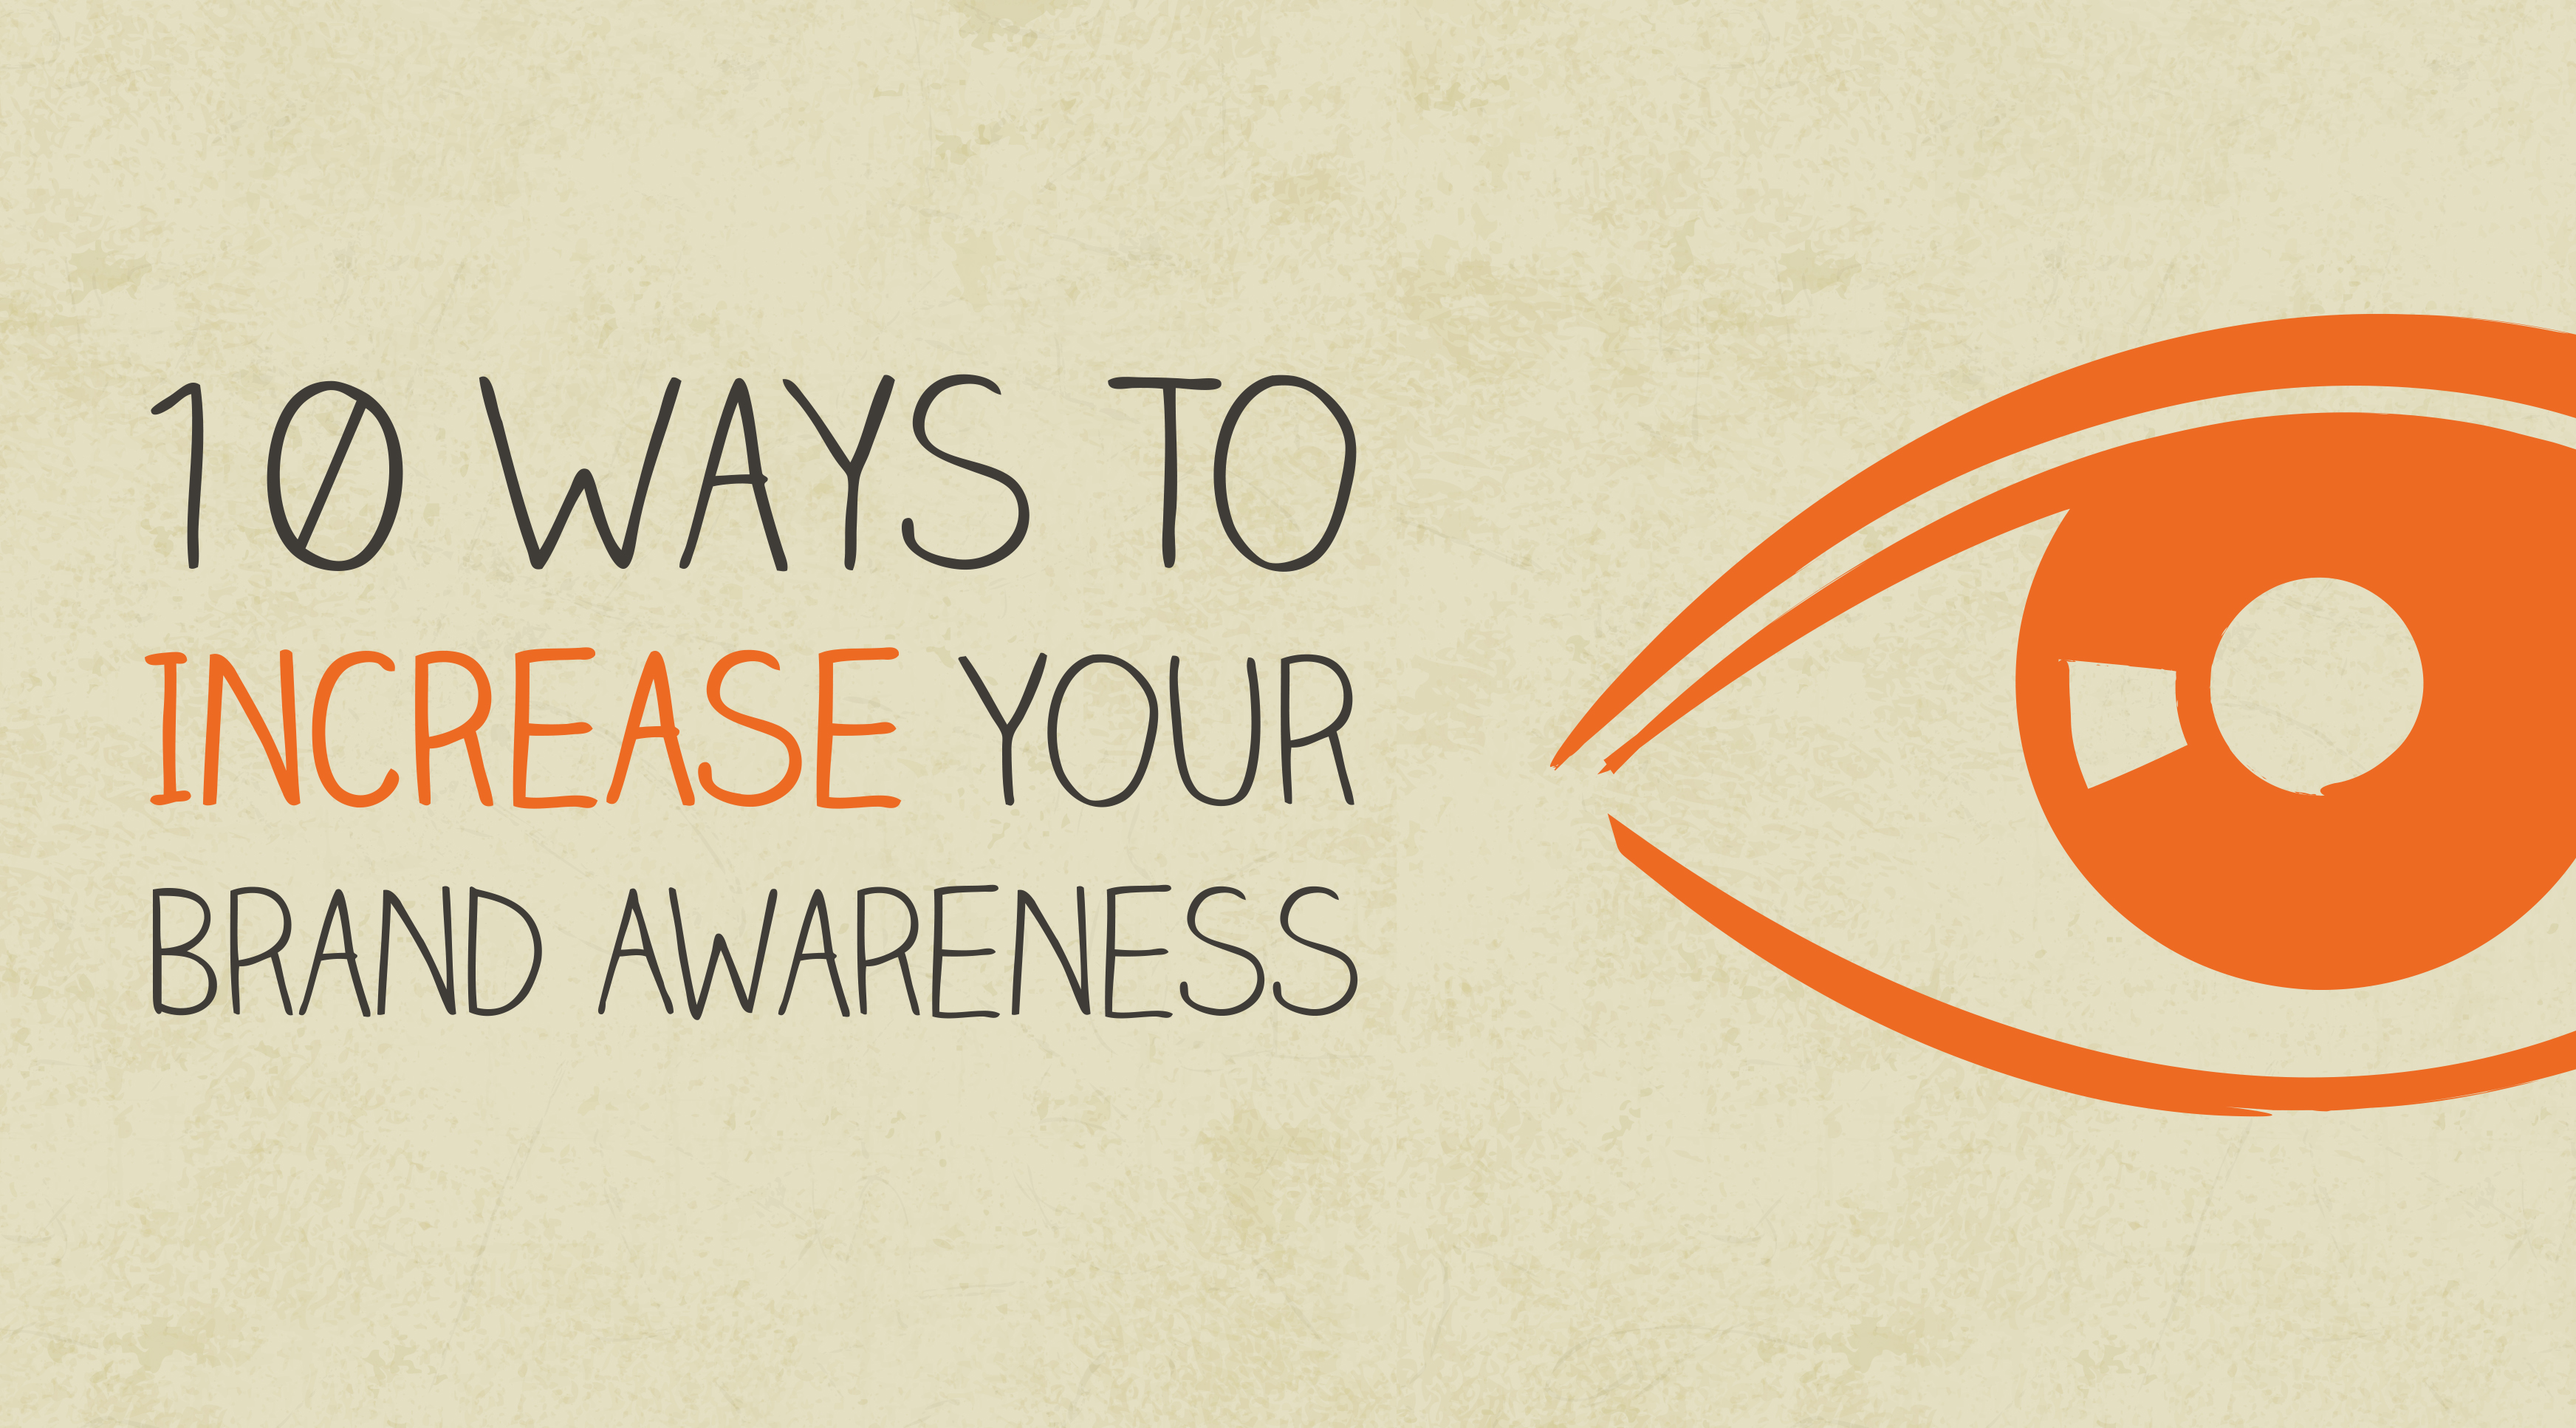 10 ways to increase your brand awareness